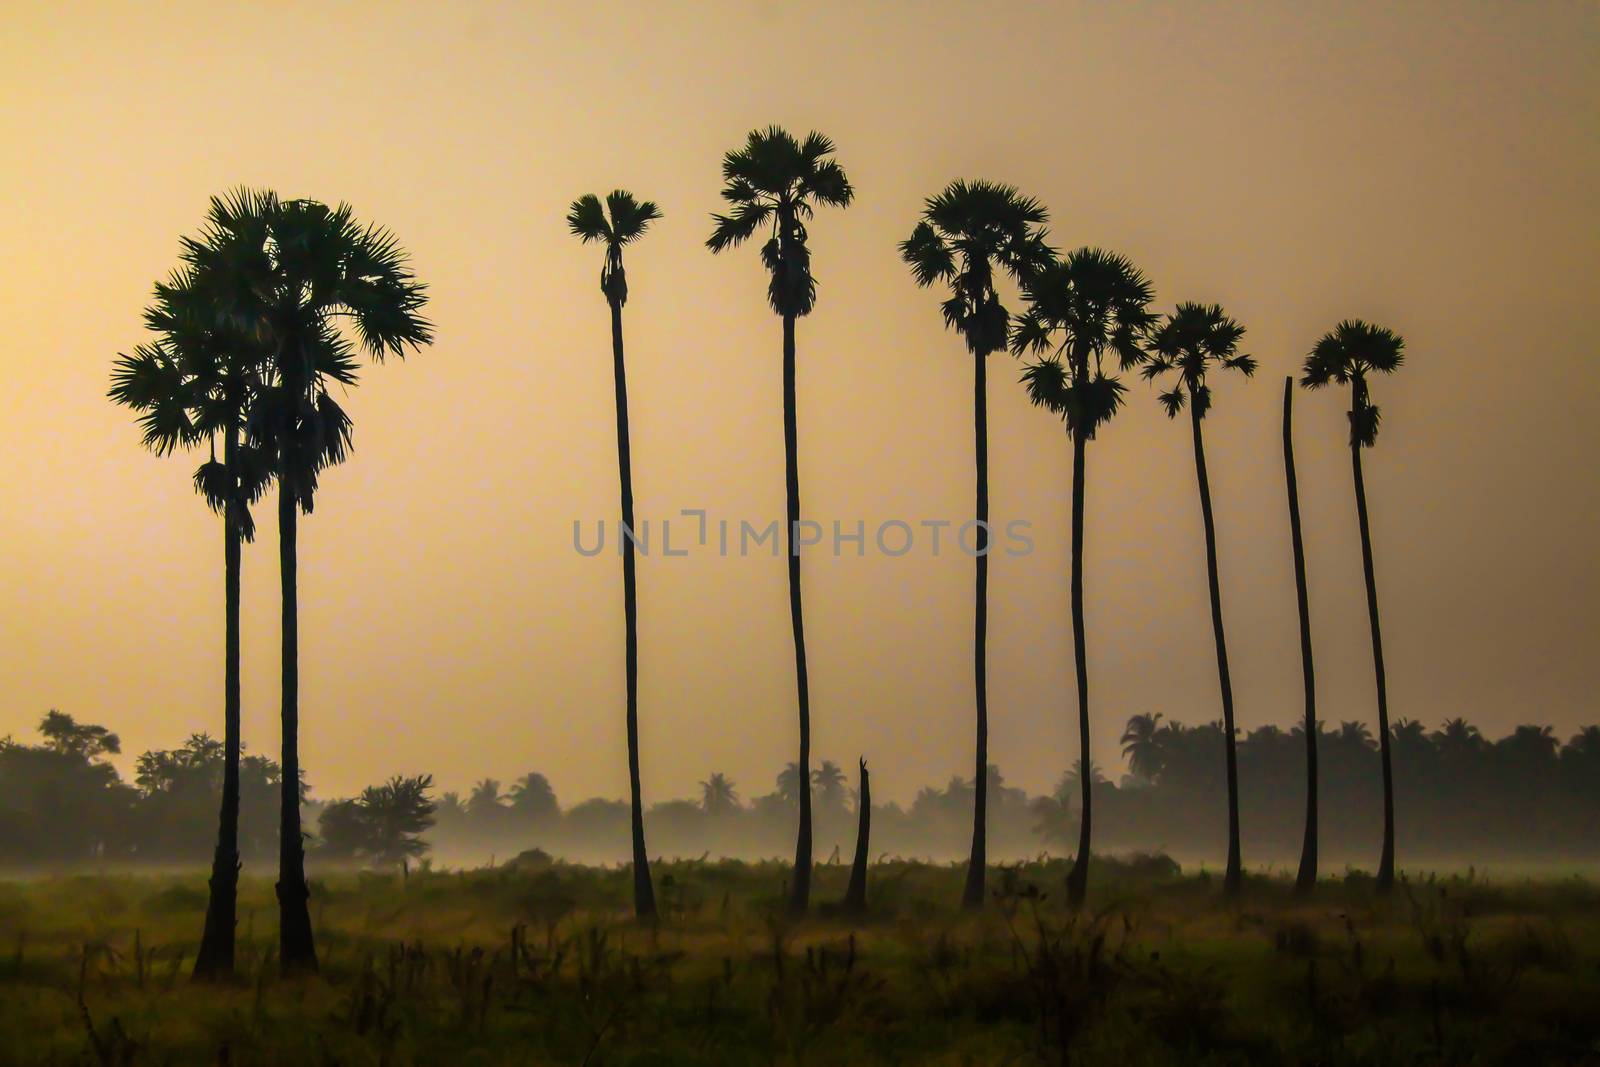 sunrise at sugar palm trees by choochart_sansong